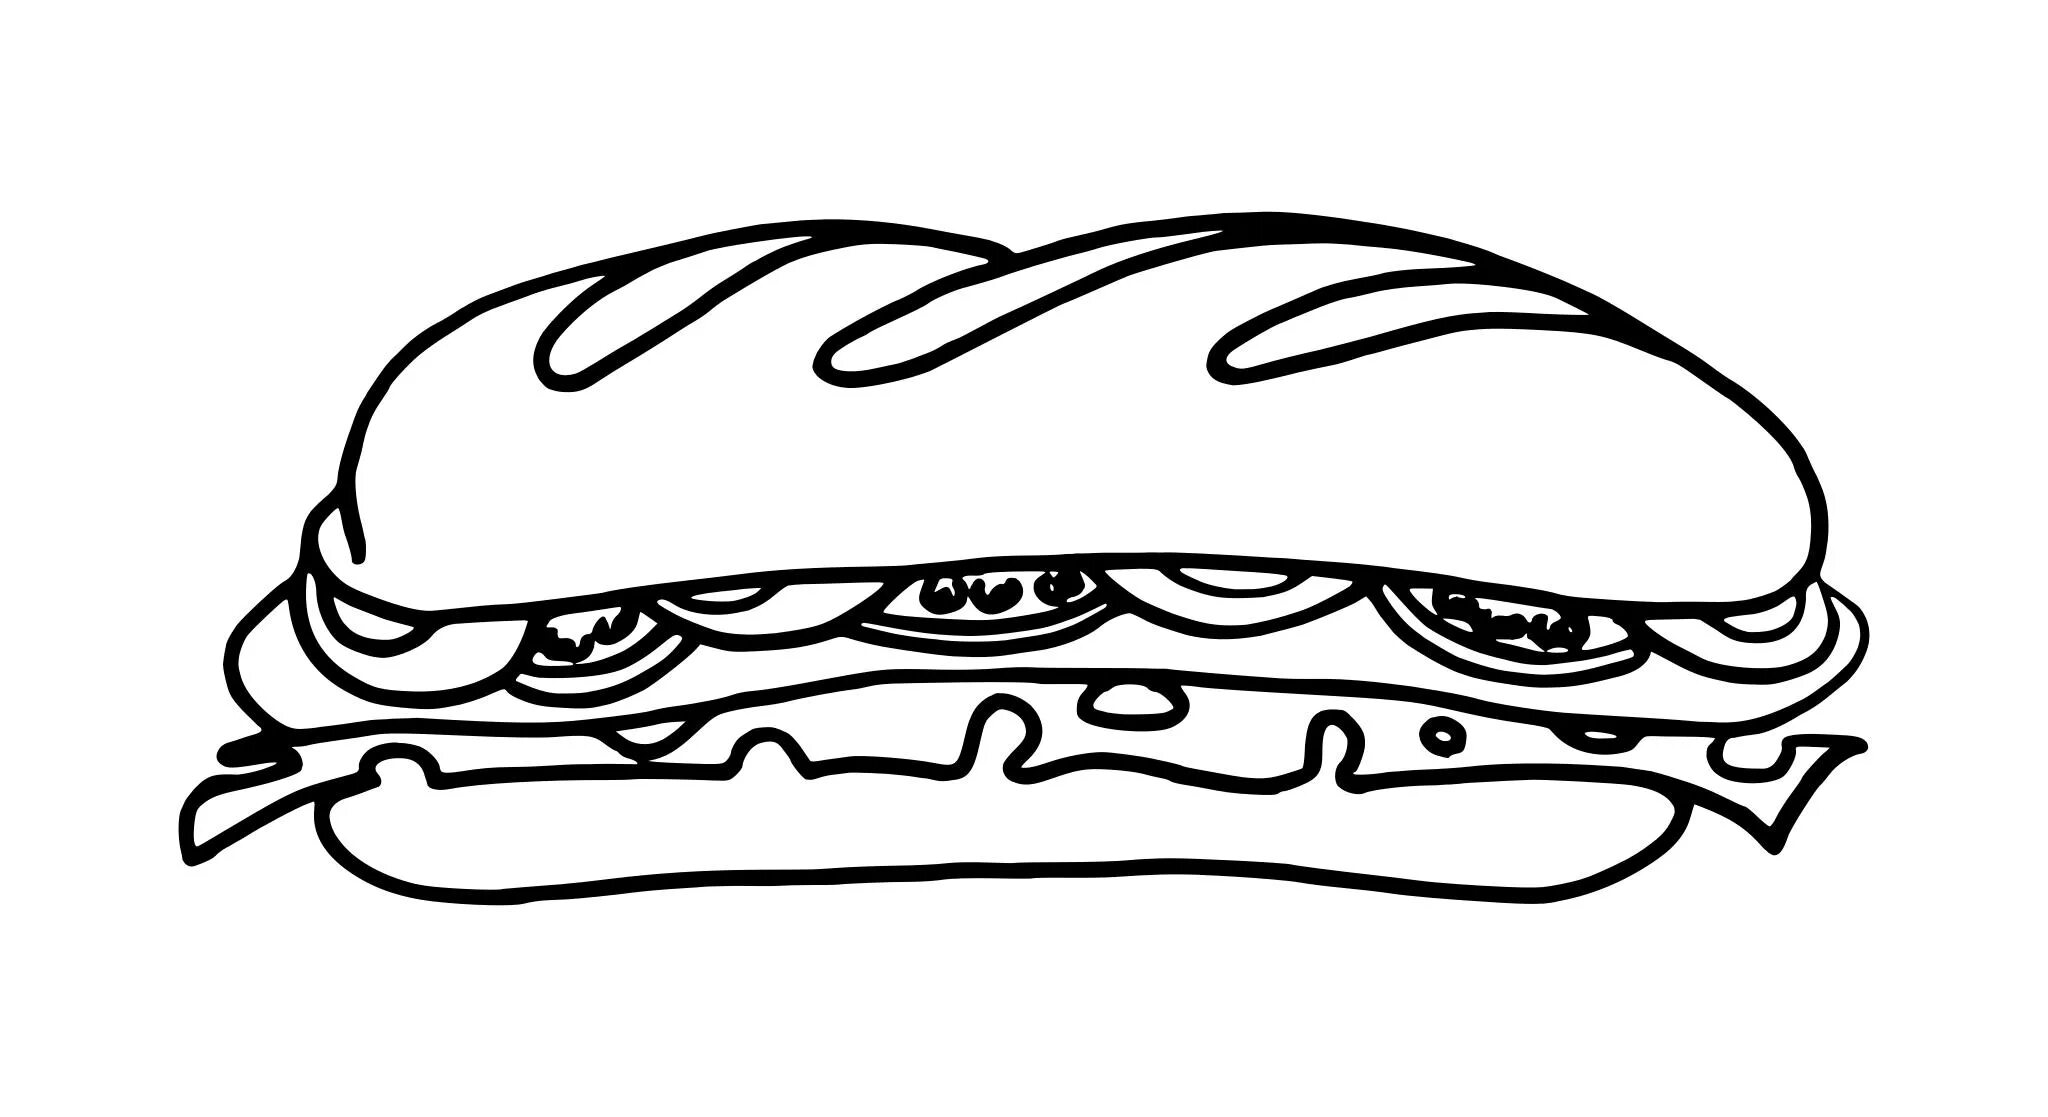 Раскраски фуд. Раскраска бутерброд. Сэндвич раскраска. Эскиз бутерброда. Бутерброд раскраска для детей.